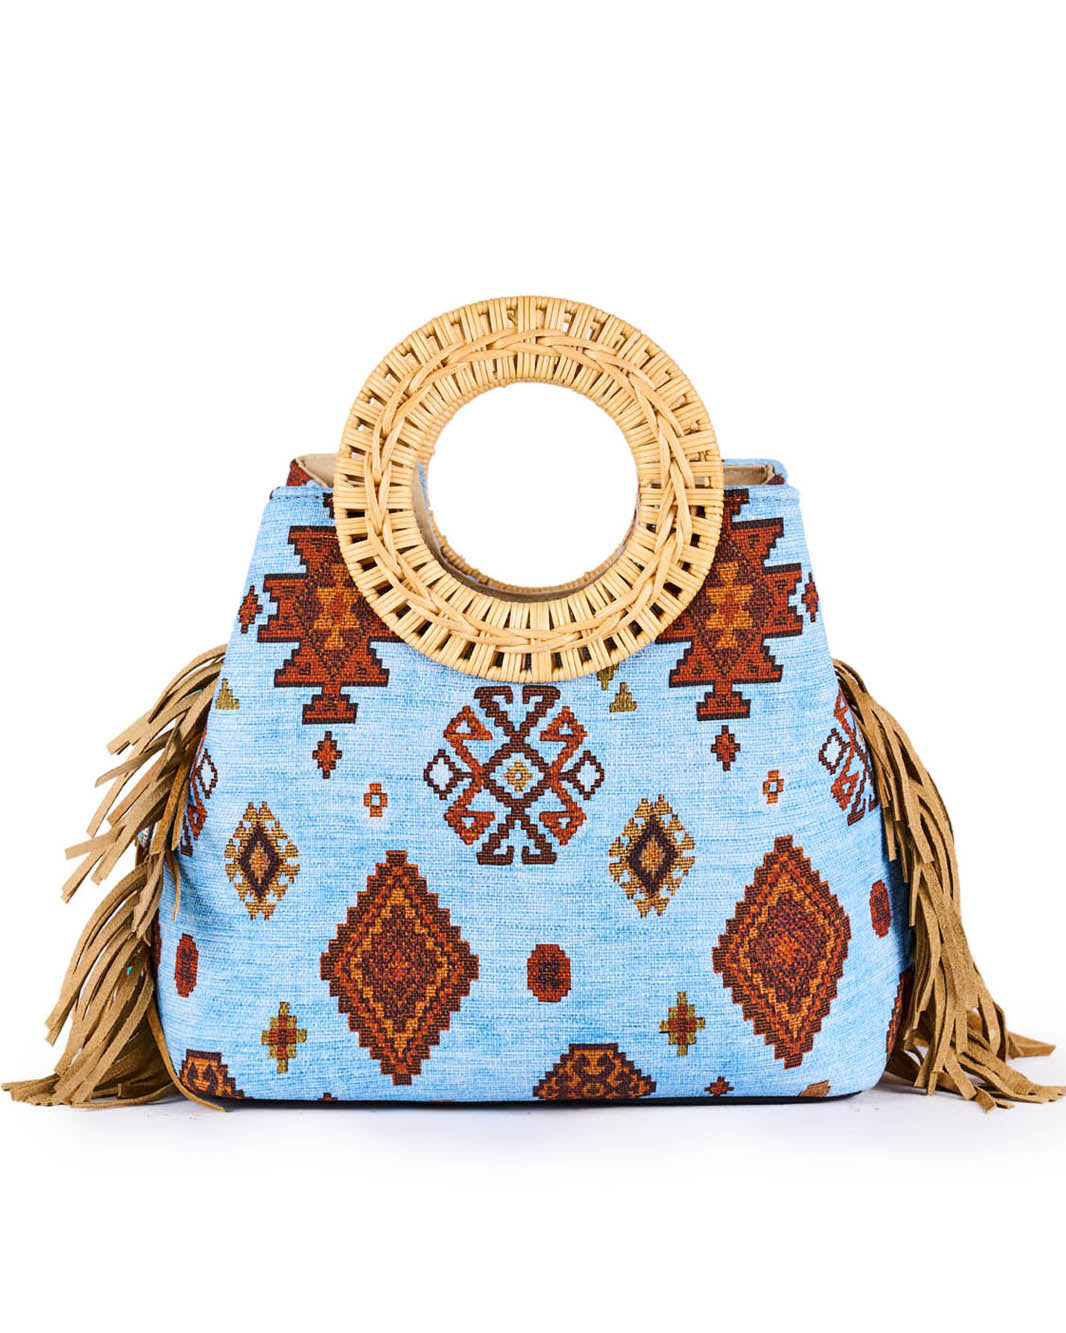 Blue Aztec print handbag with round bamboo handle and tan fringe